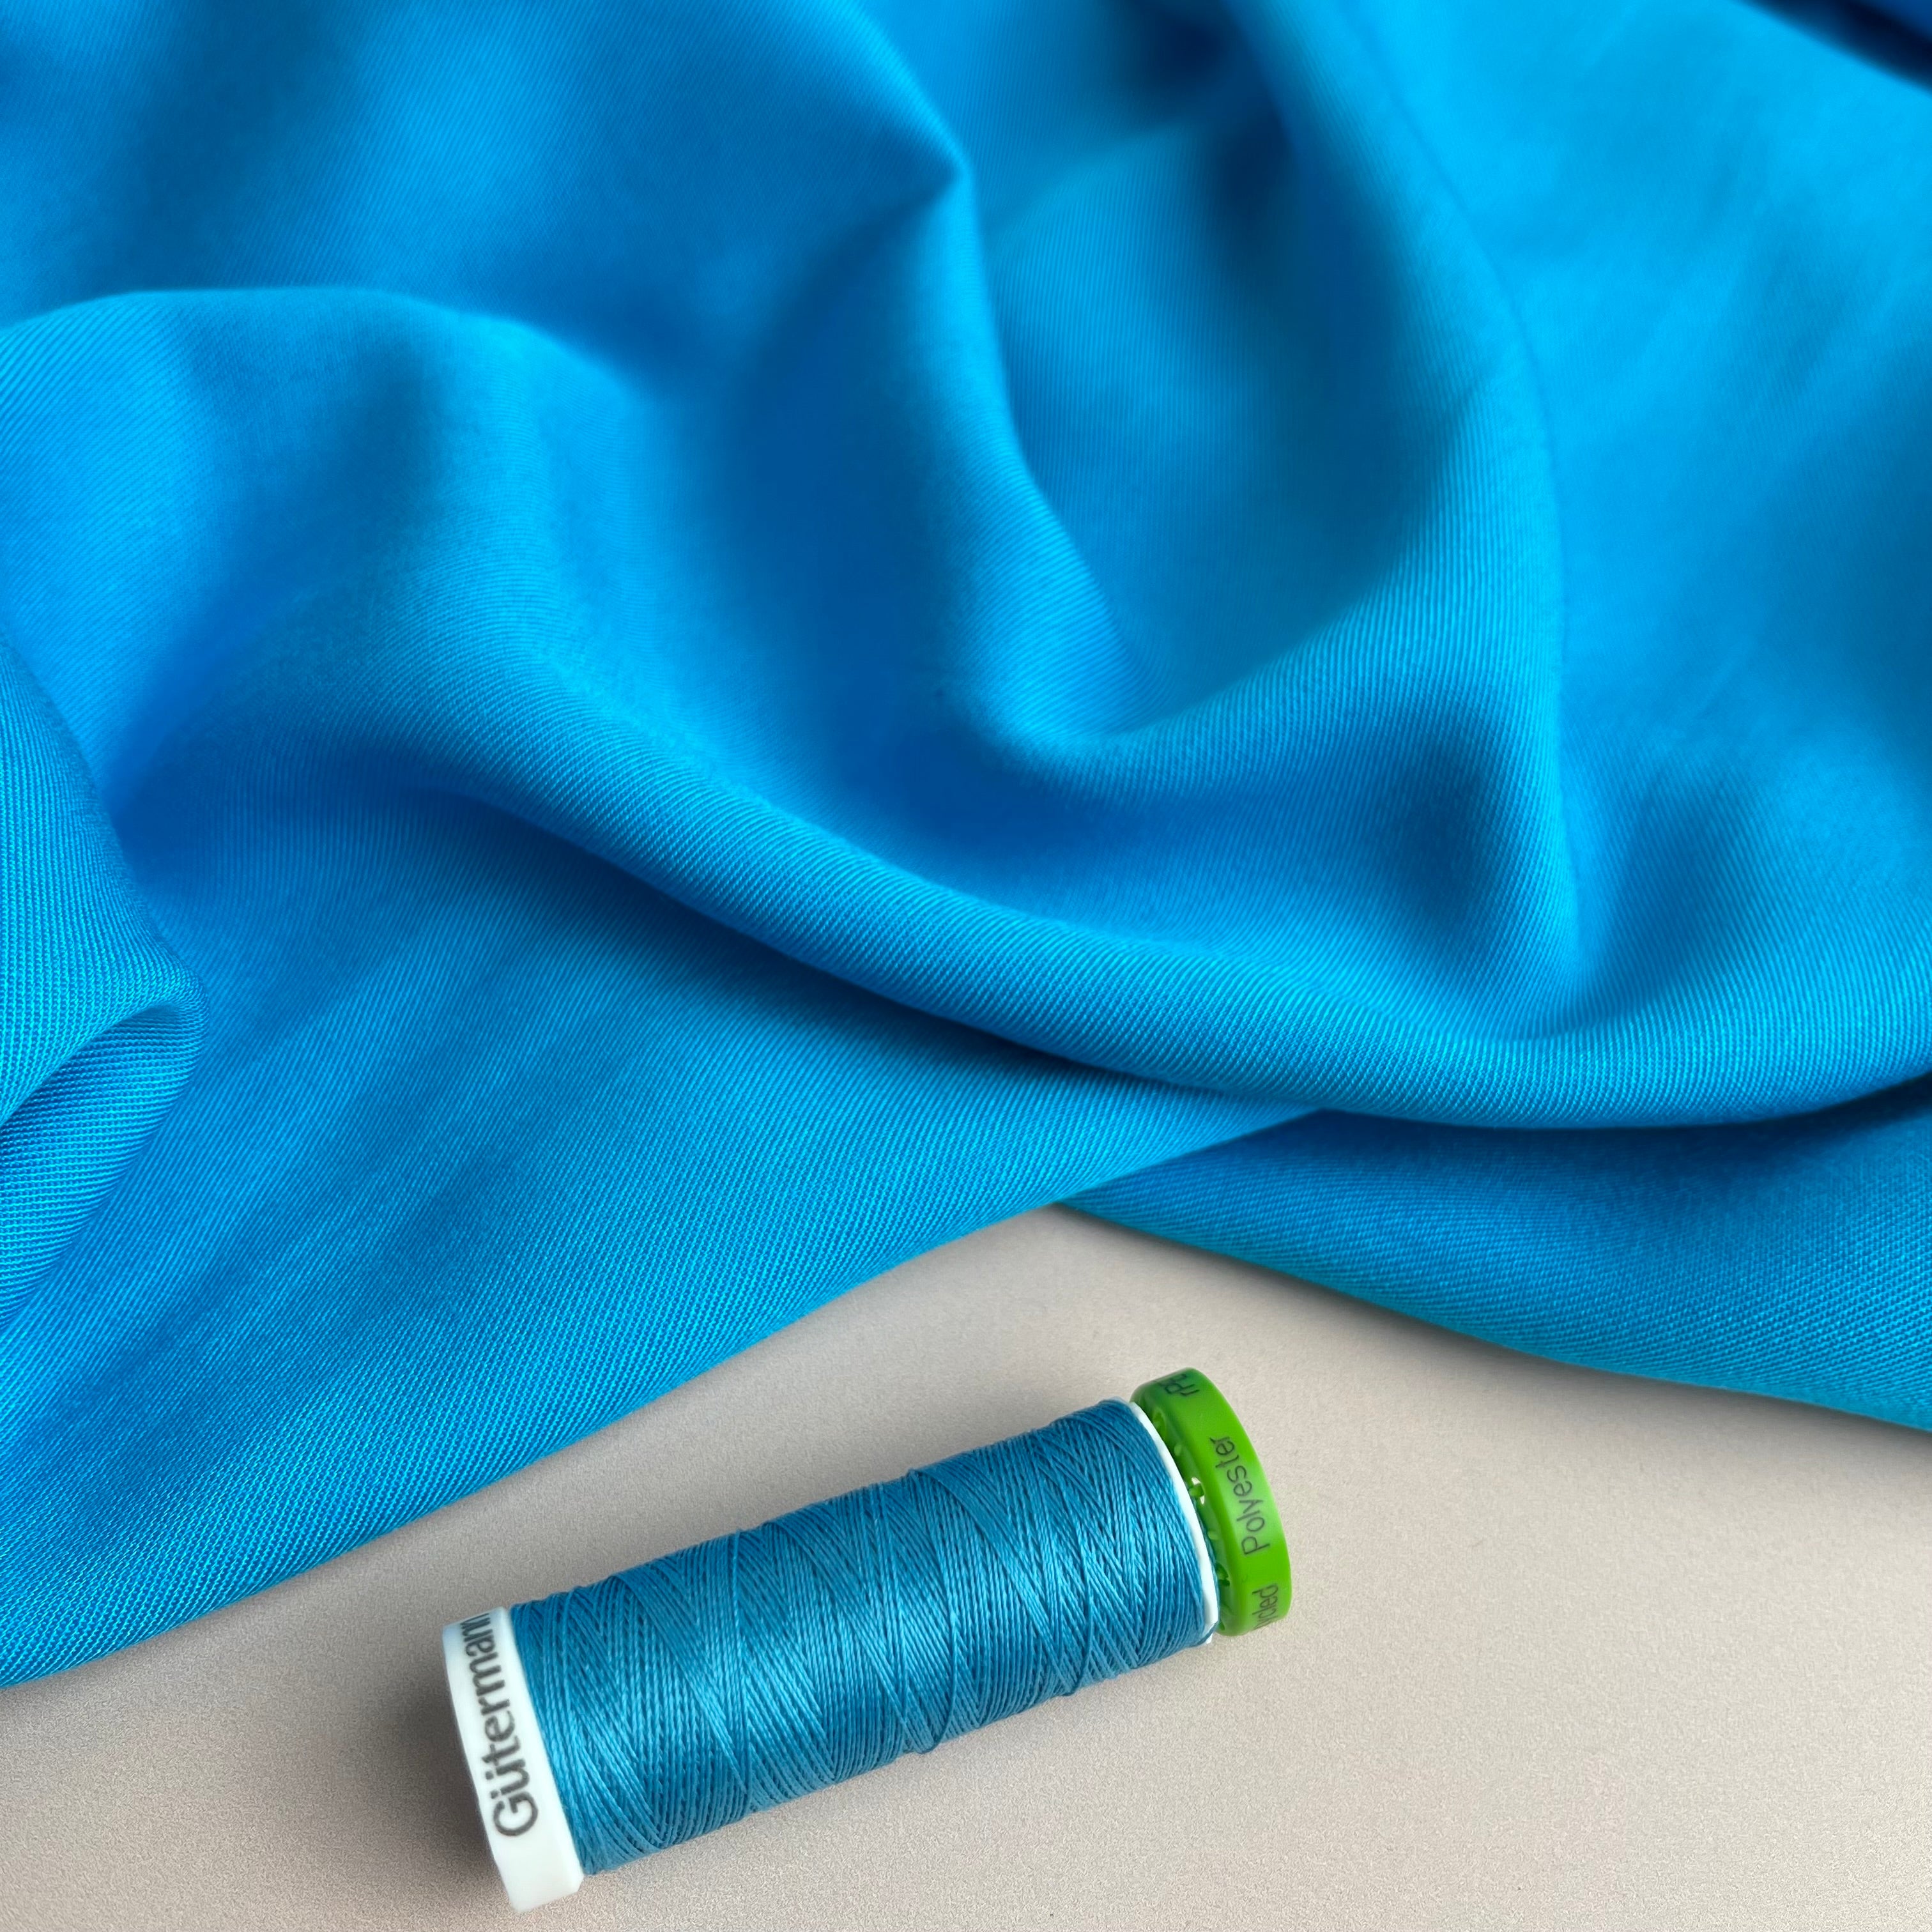 REMNANT 0.58 Metre - Grandeur Turquoise Blue Viscose Twill Dress Fabric